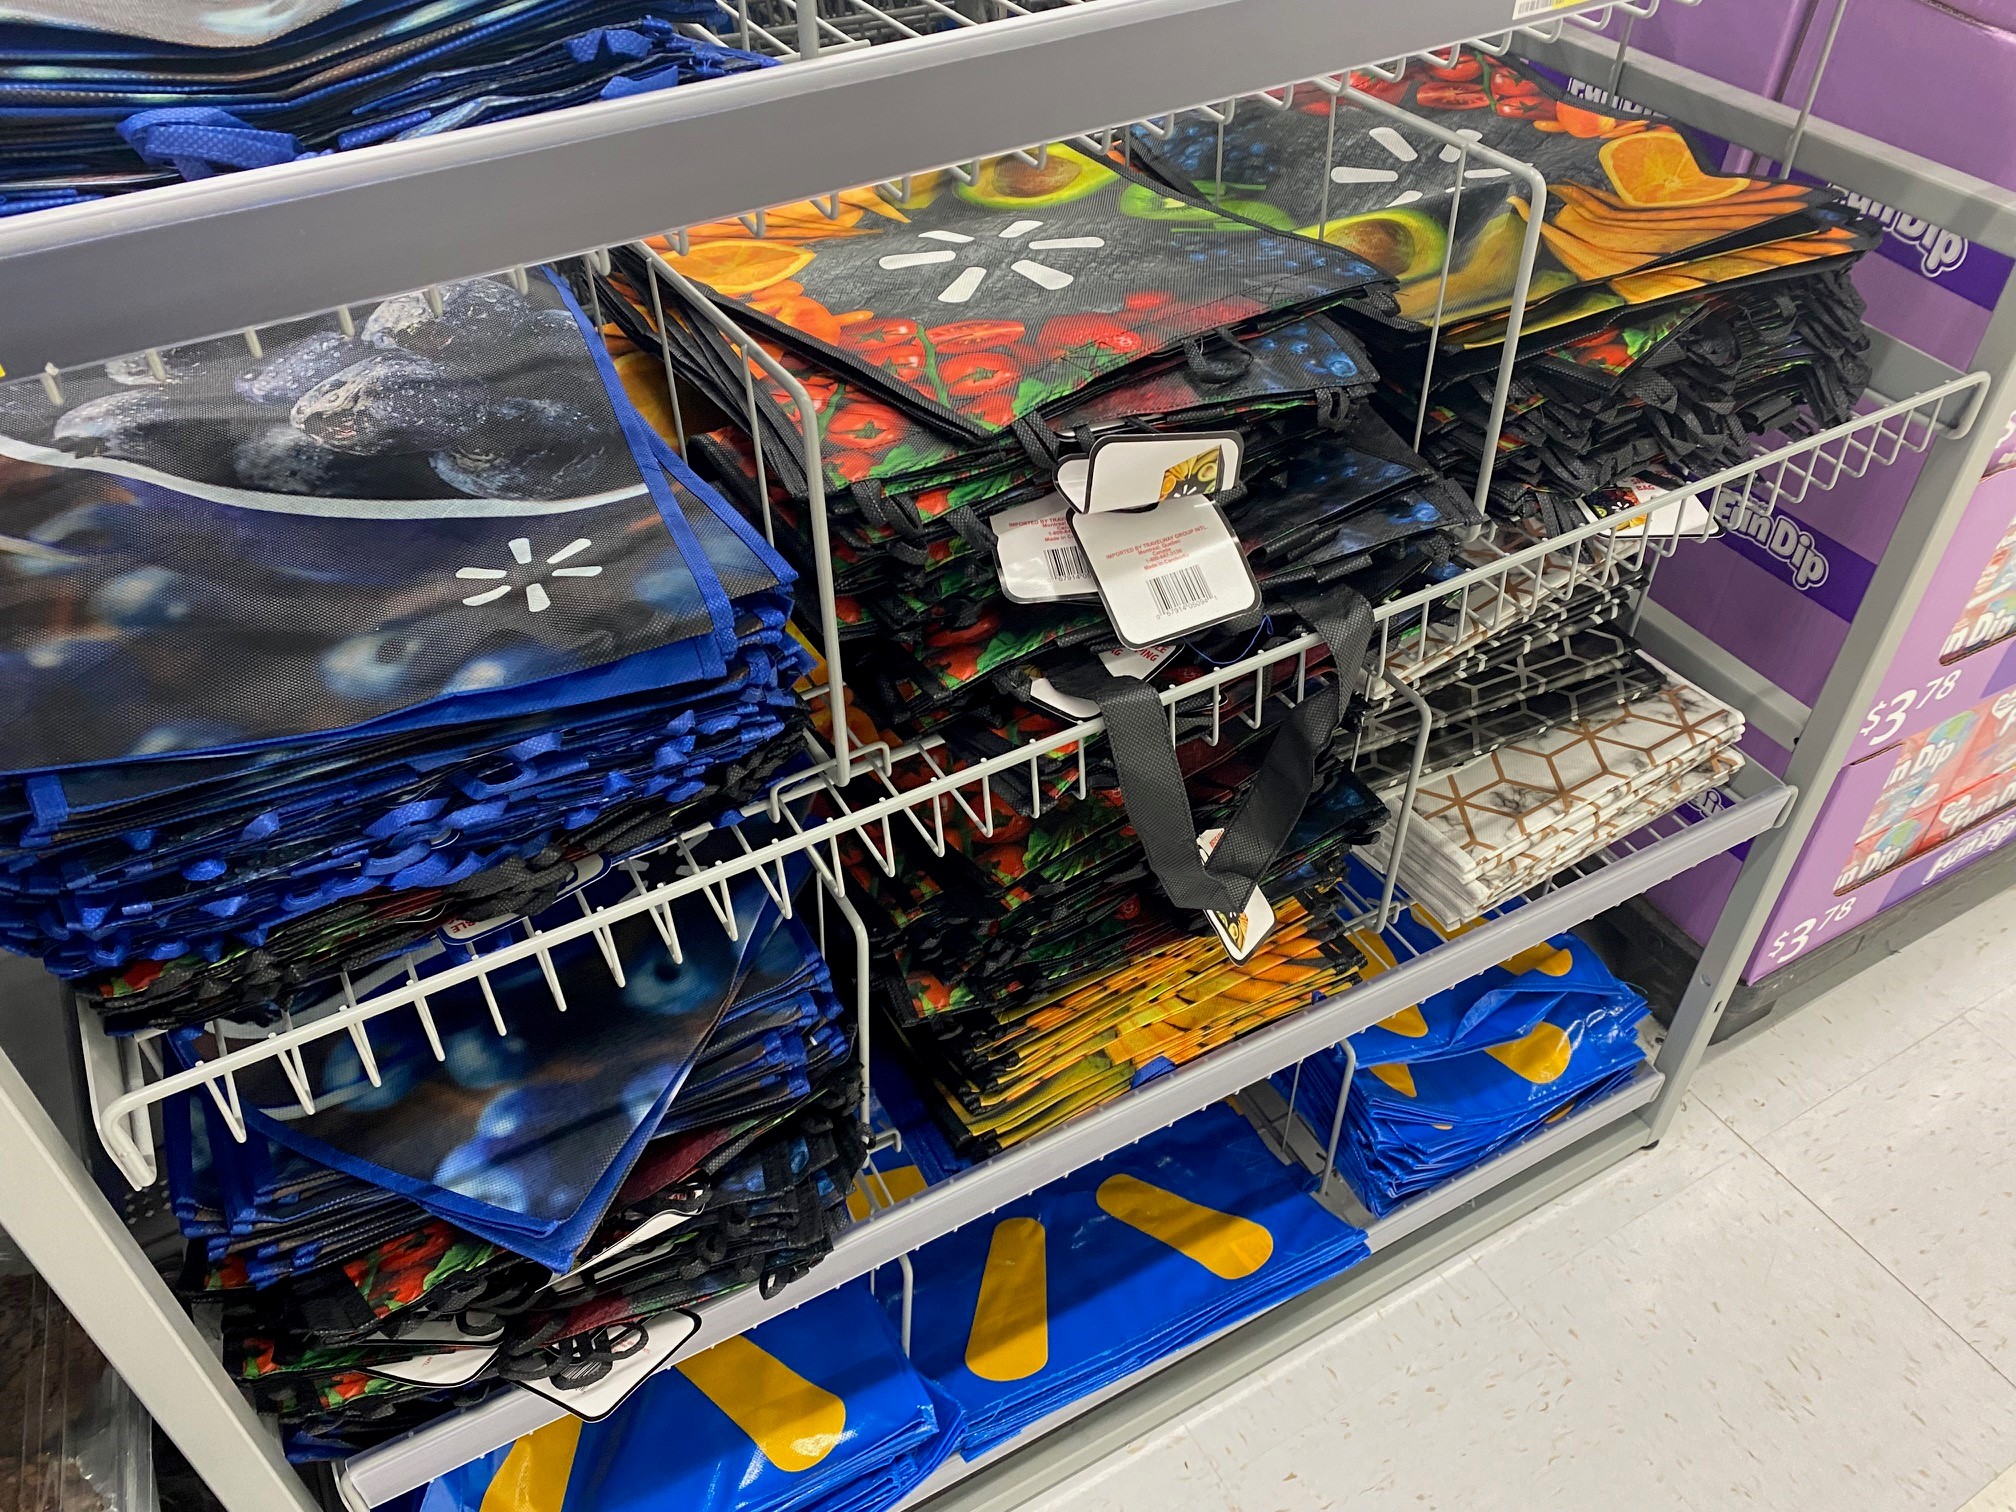 OMG! Are Plastic Bags Going Away in South Dakota Walmarts?